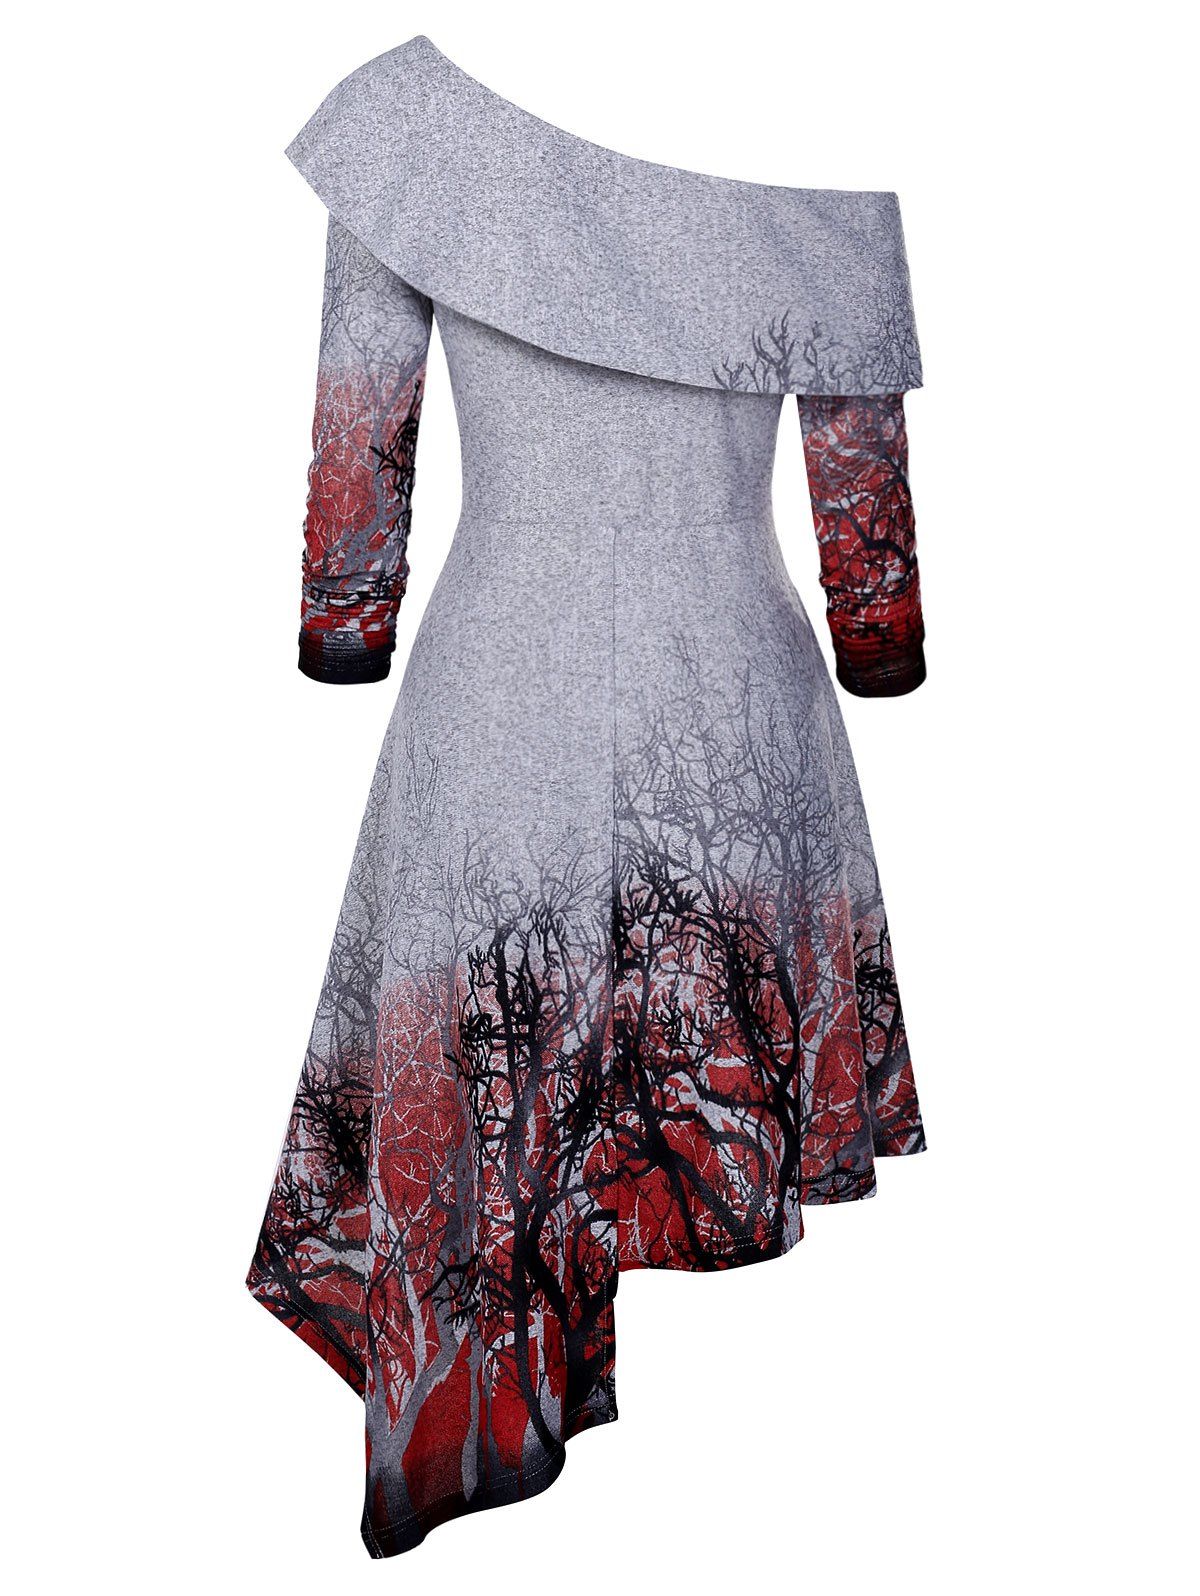 Women Fashion Spaghetti Strap Tree Print Sequined Dress Size S,M,L,XL,2XL,3XL